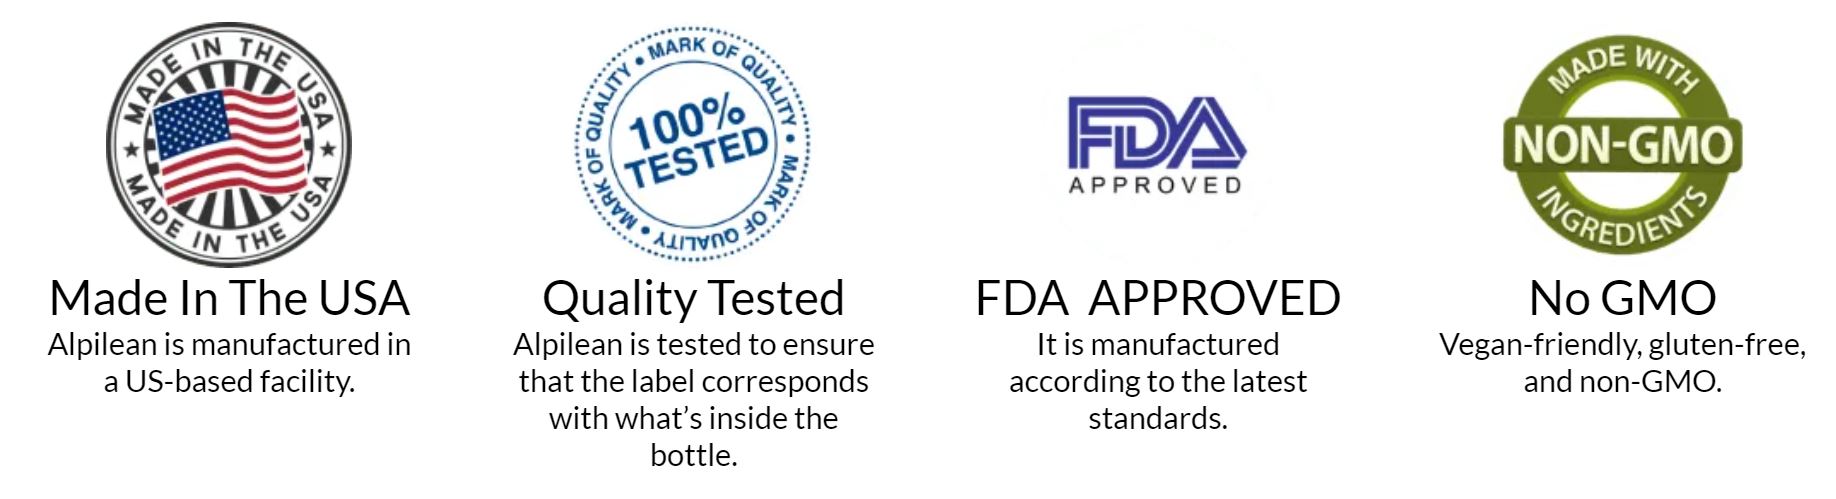 Alpilean FDA approved